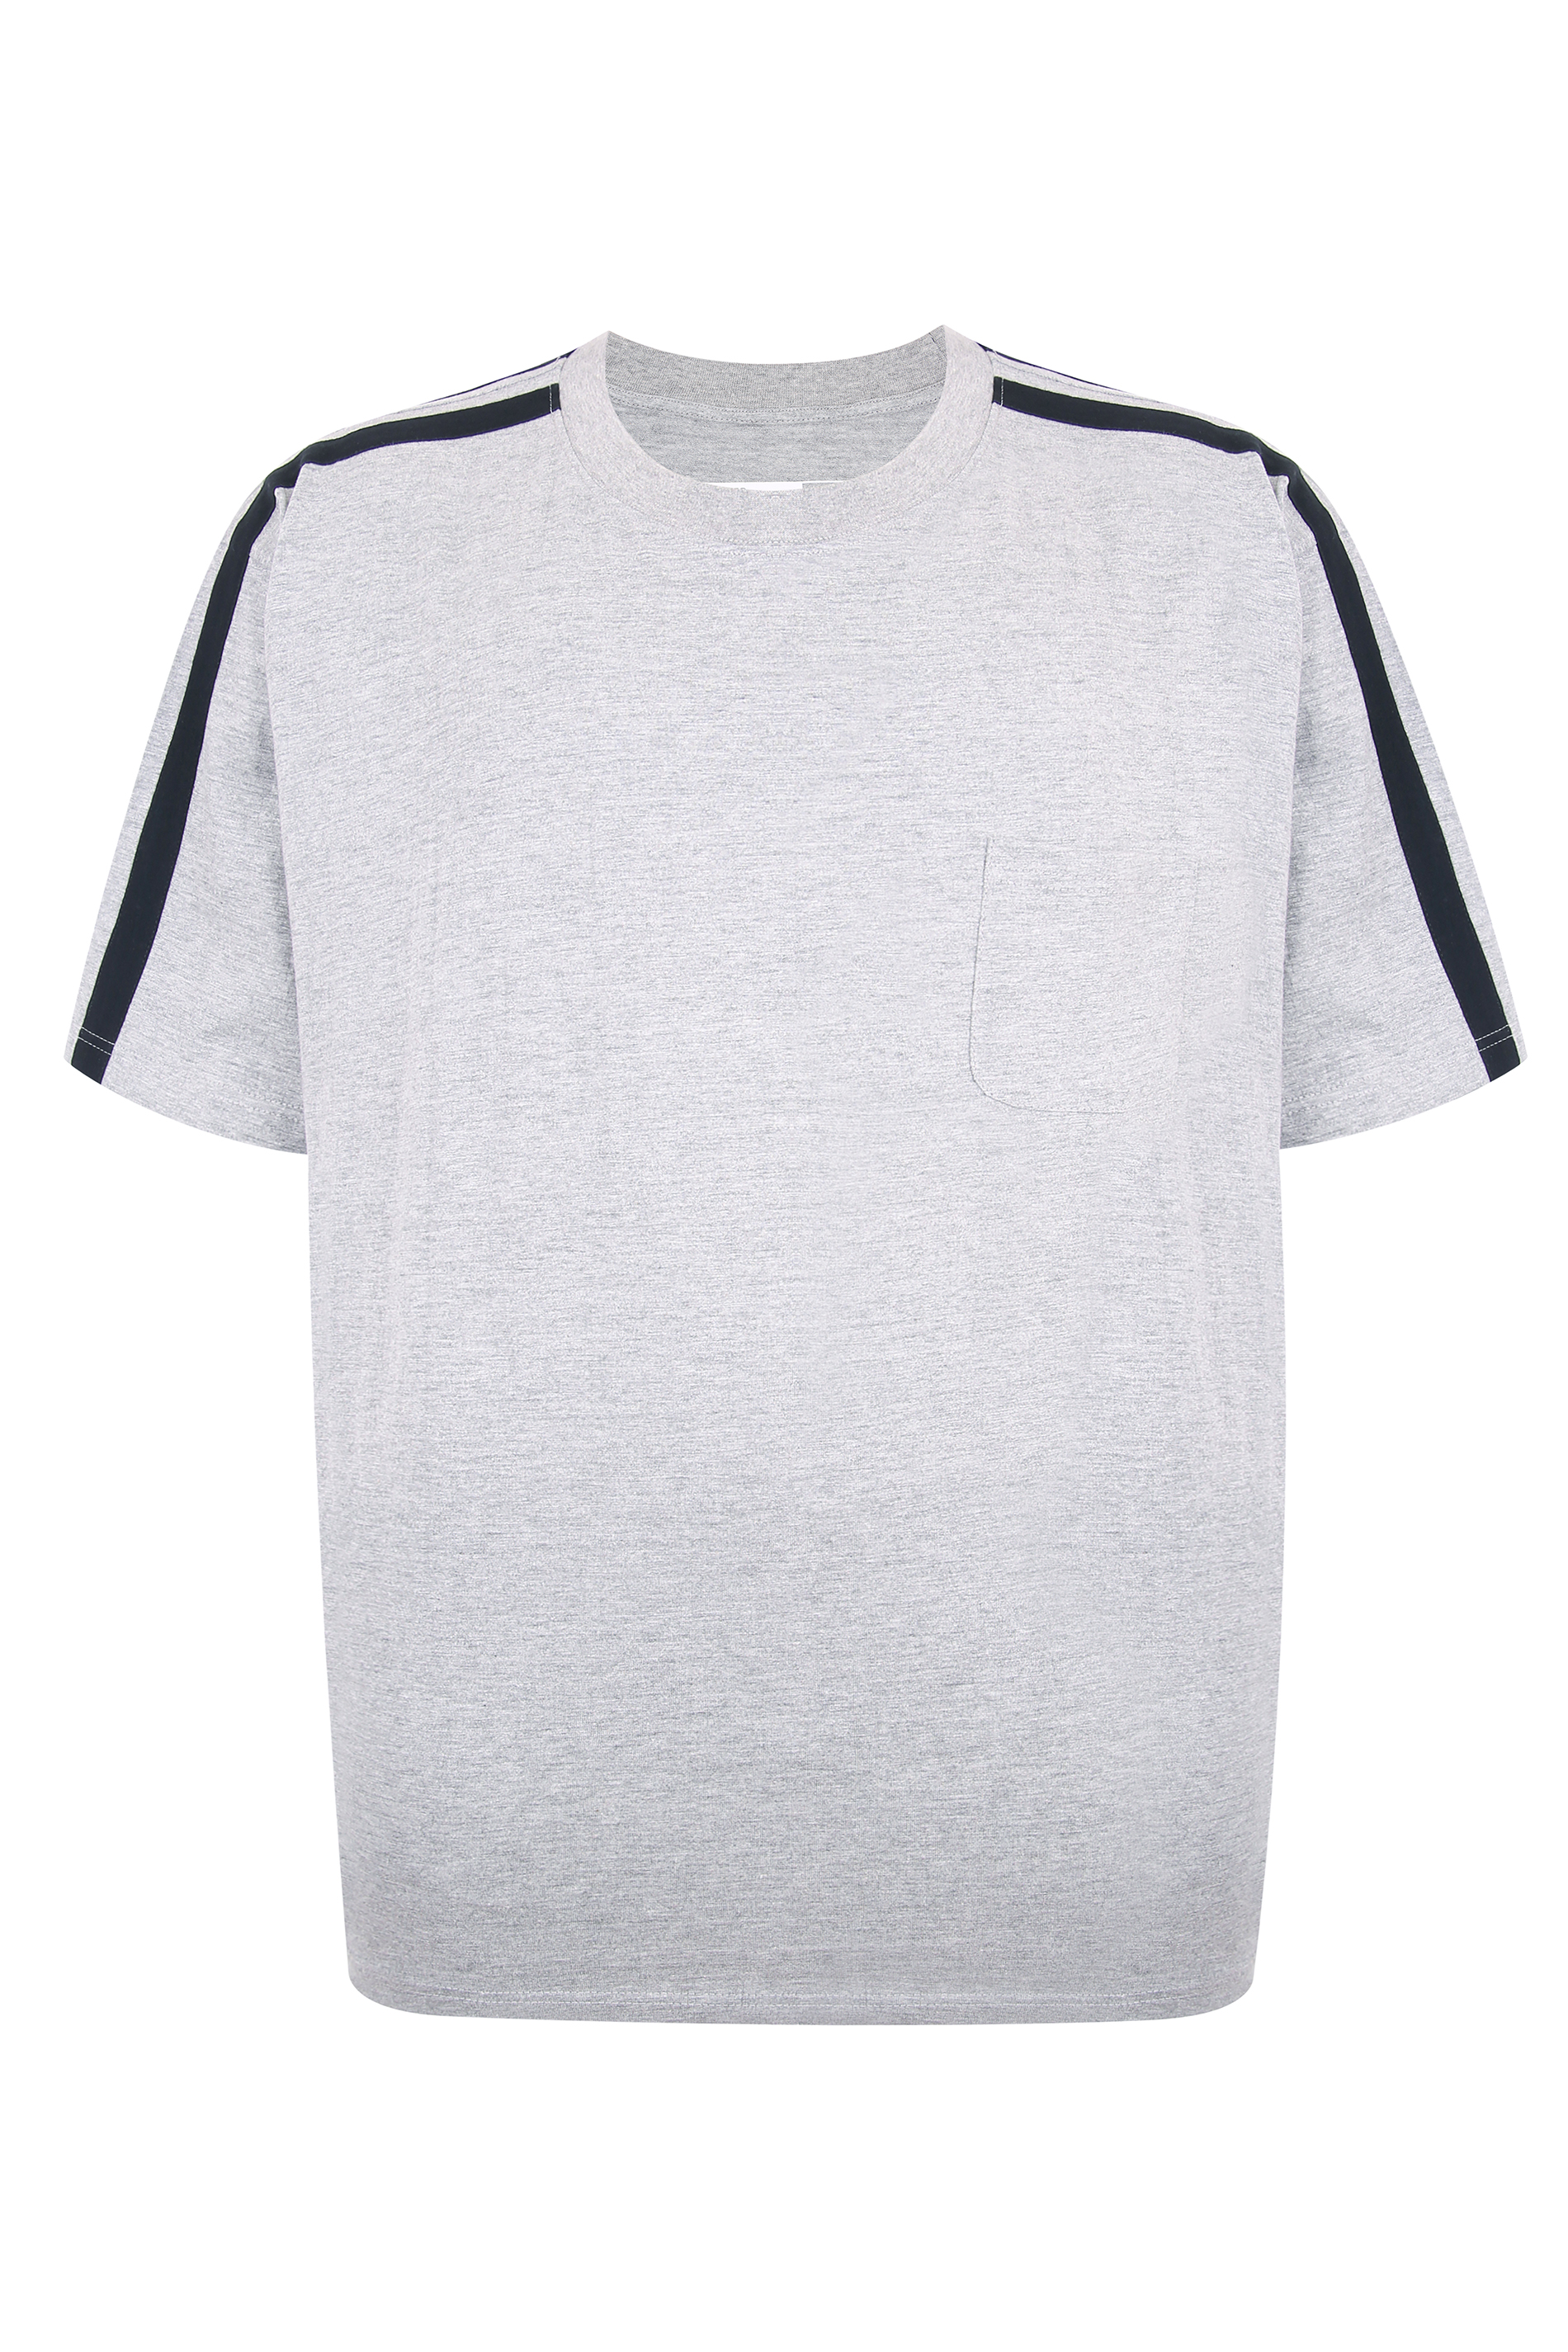 ED BAXTER Grey Lounge T-Shirt_F.jpg